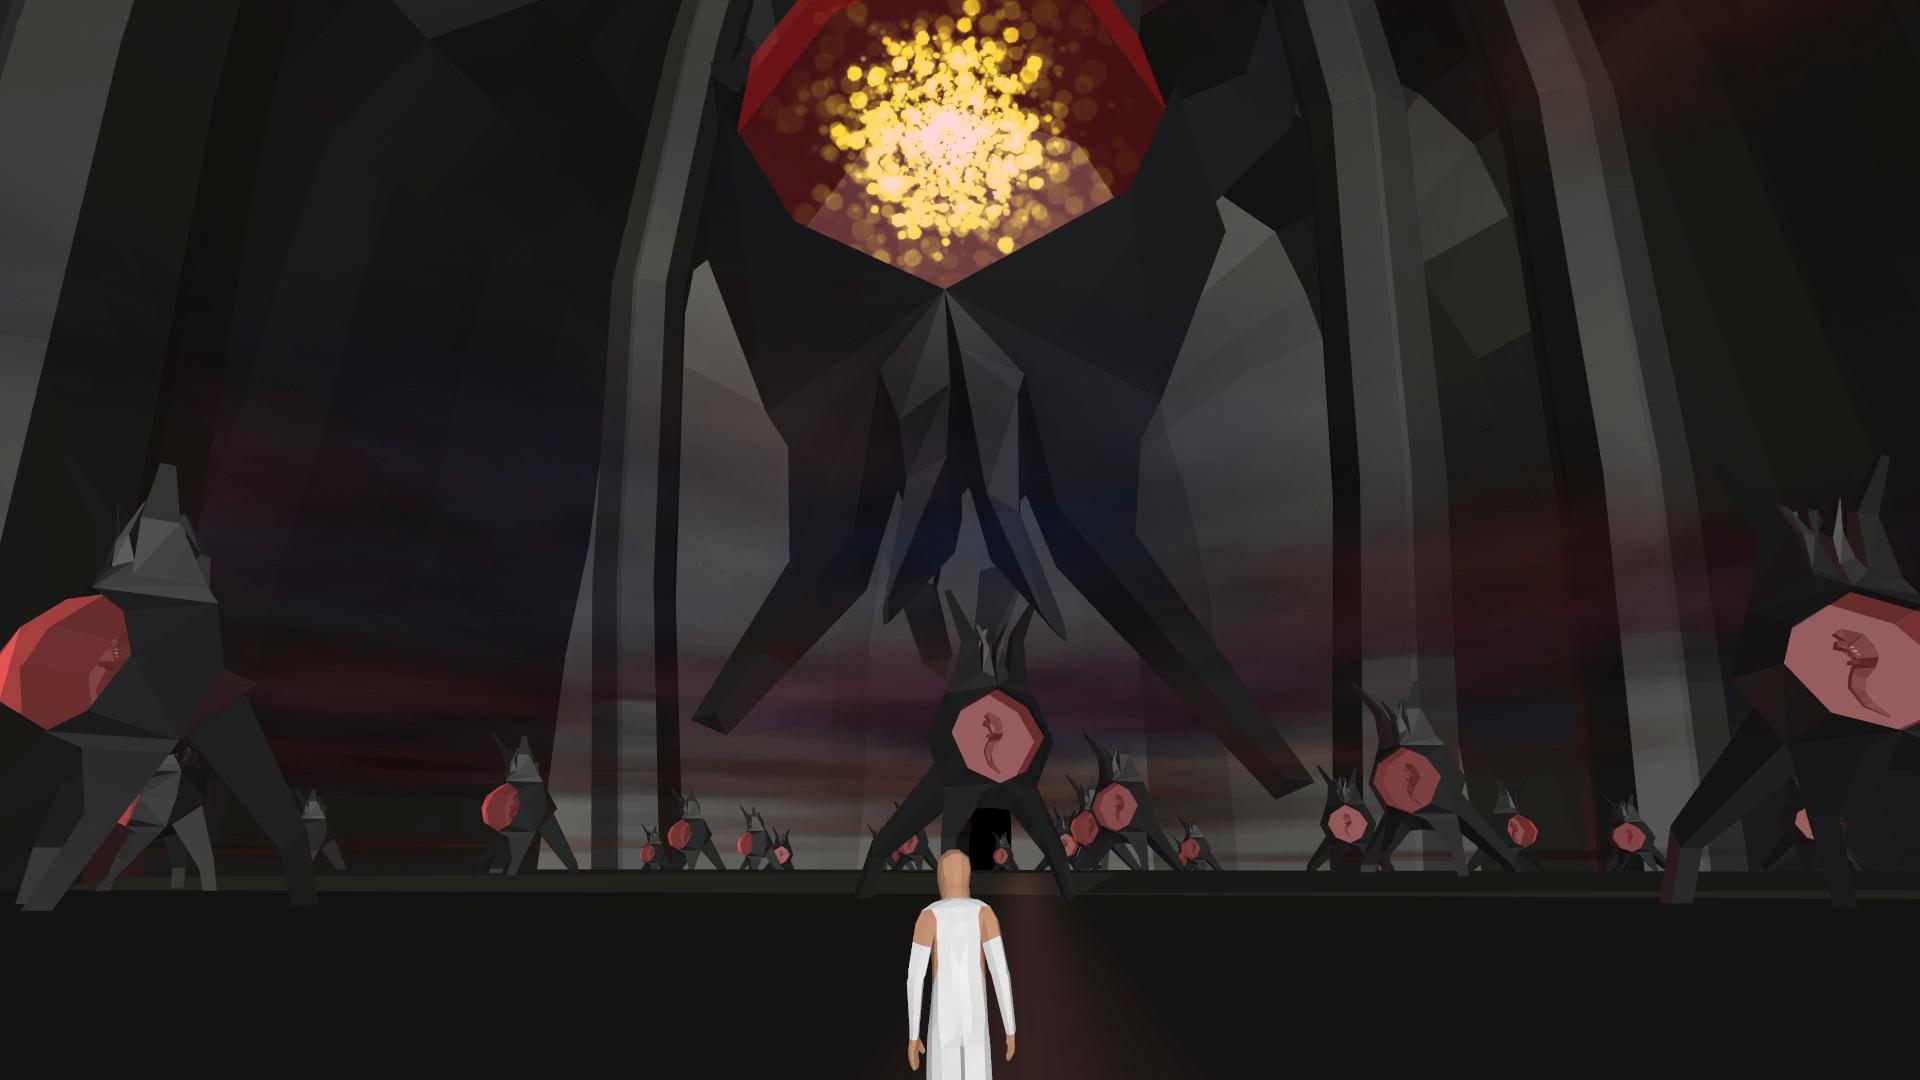 Screenshot №8 from game Laraan